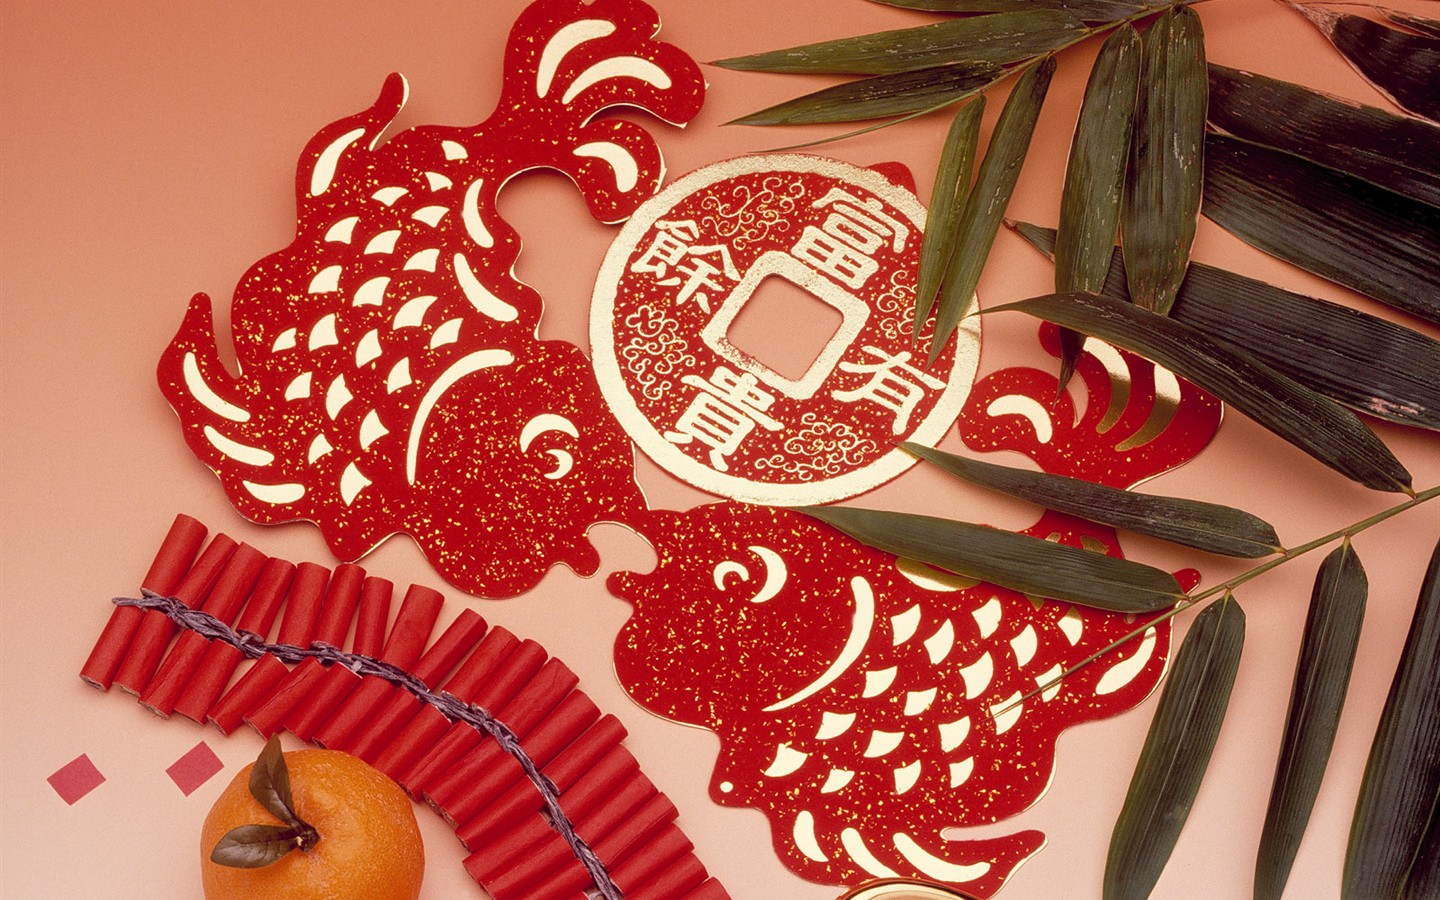 China Wind festive red wallpaper #17 - 1440x900